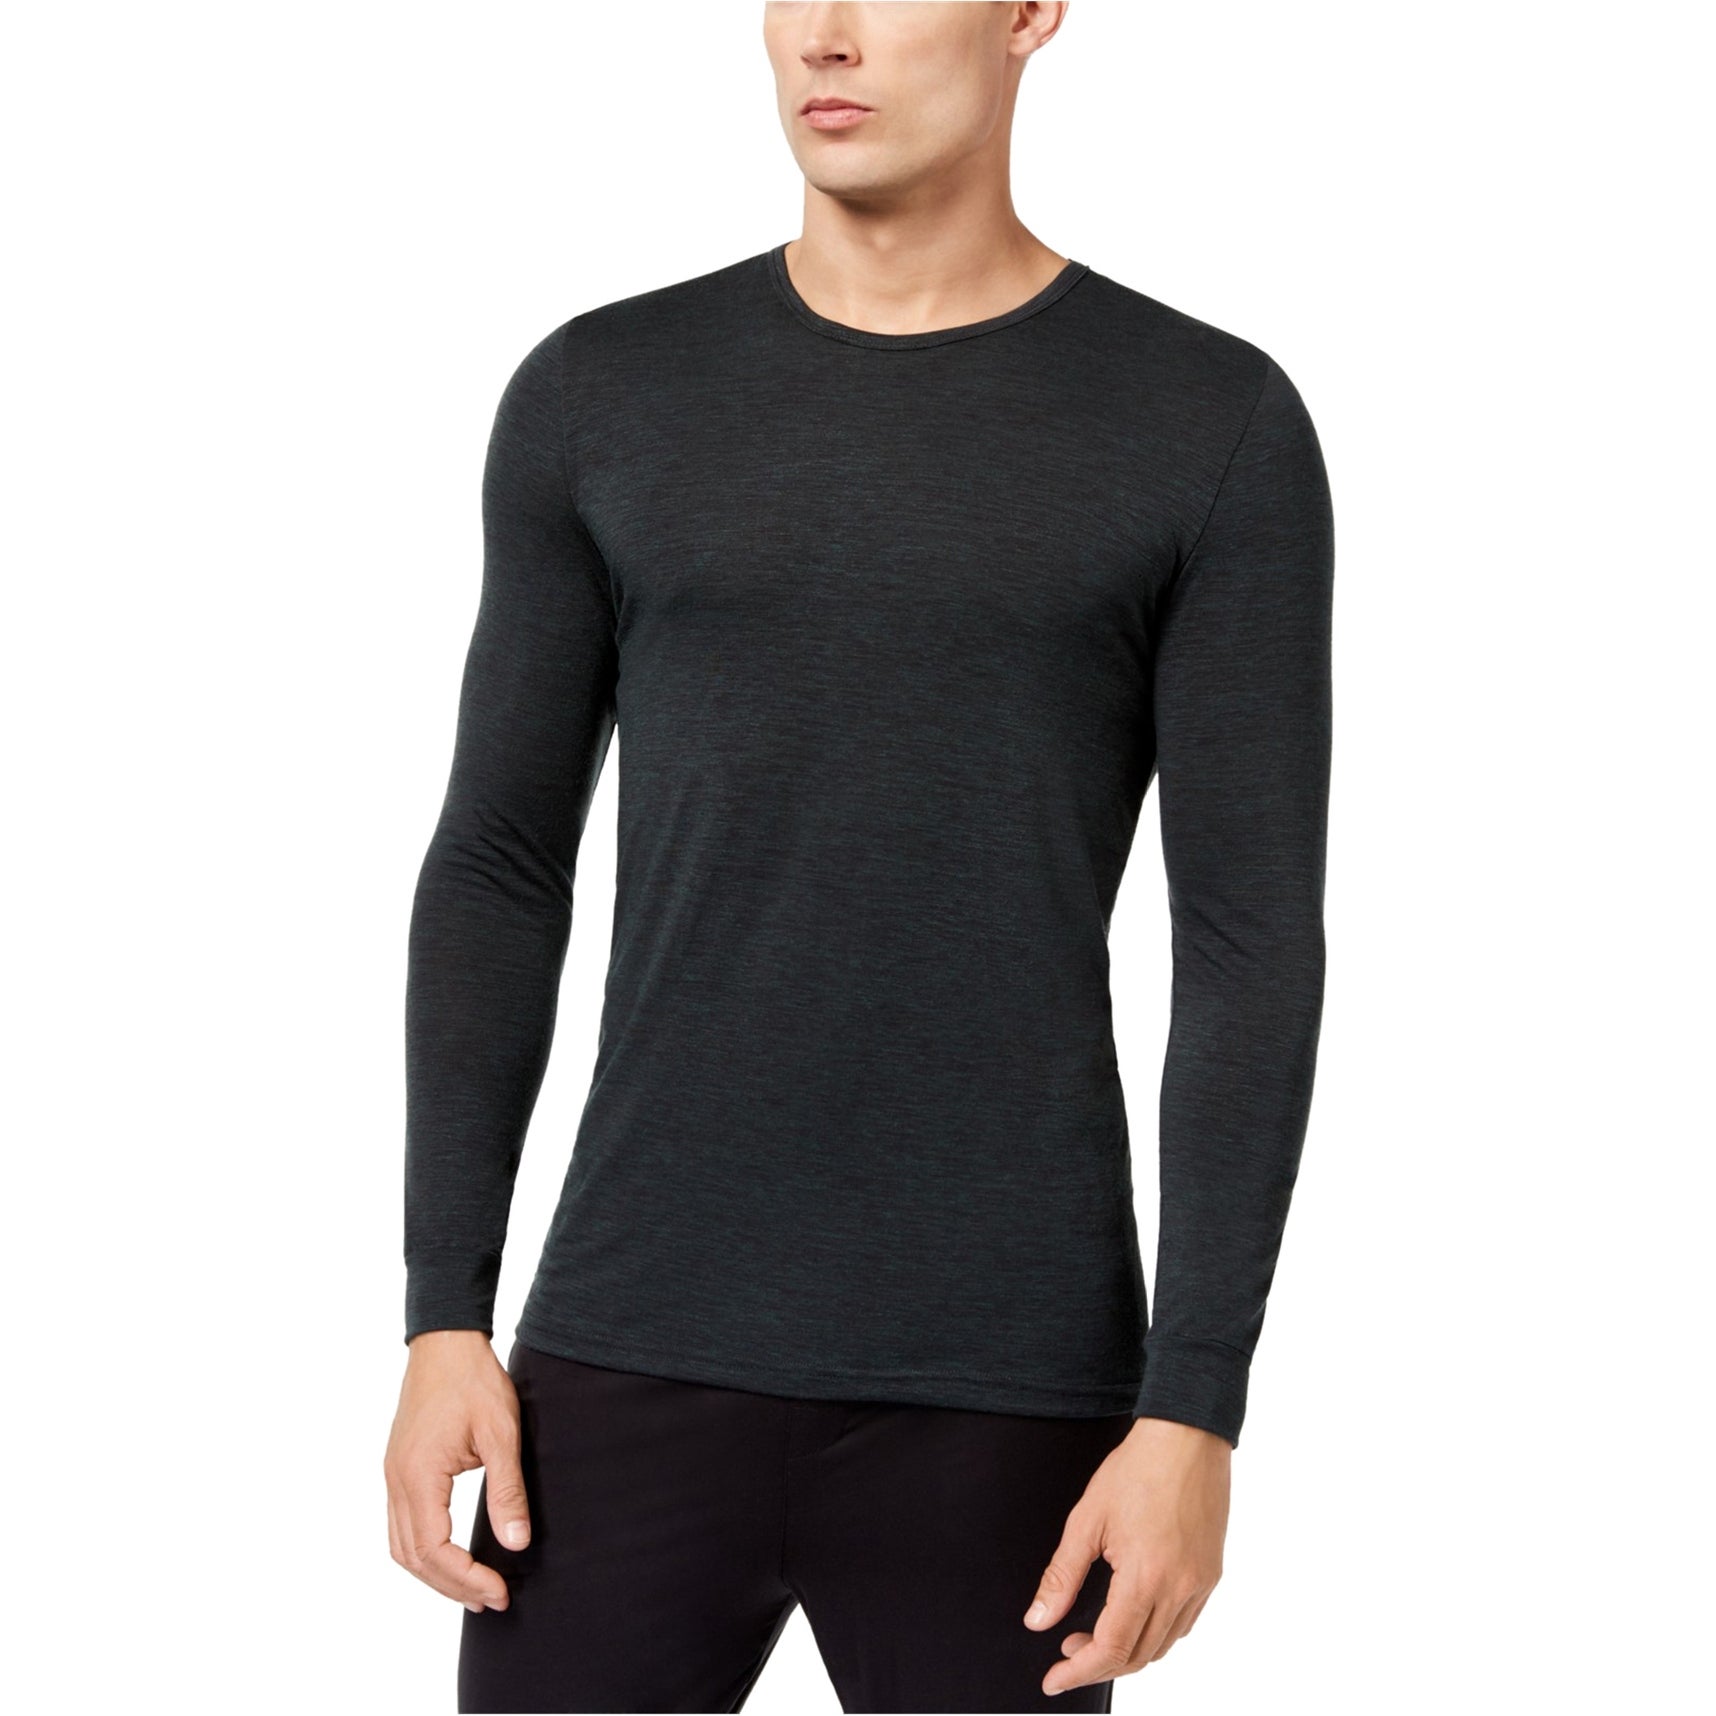 32 Degrees Men's Base Layer Crew Neck Shirt Black Size Small